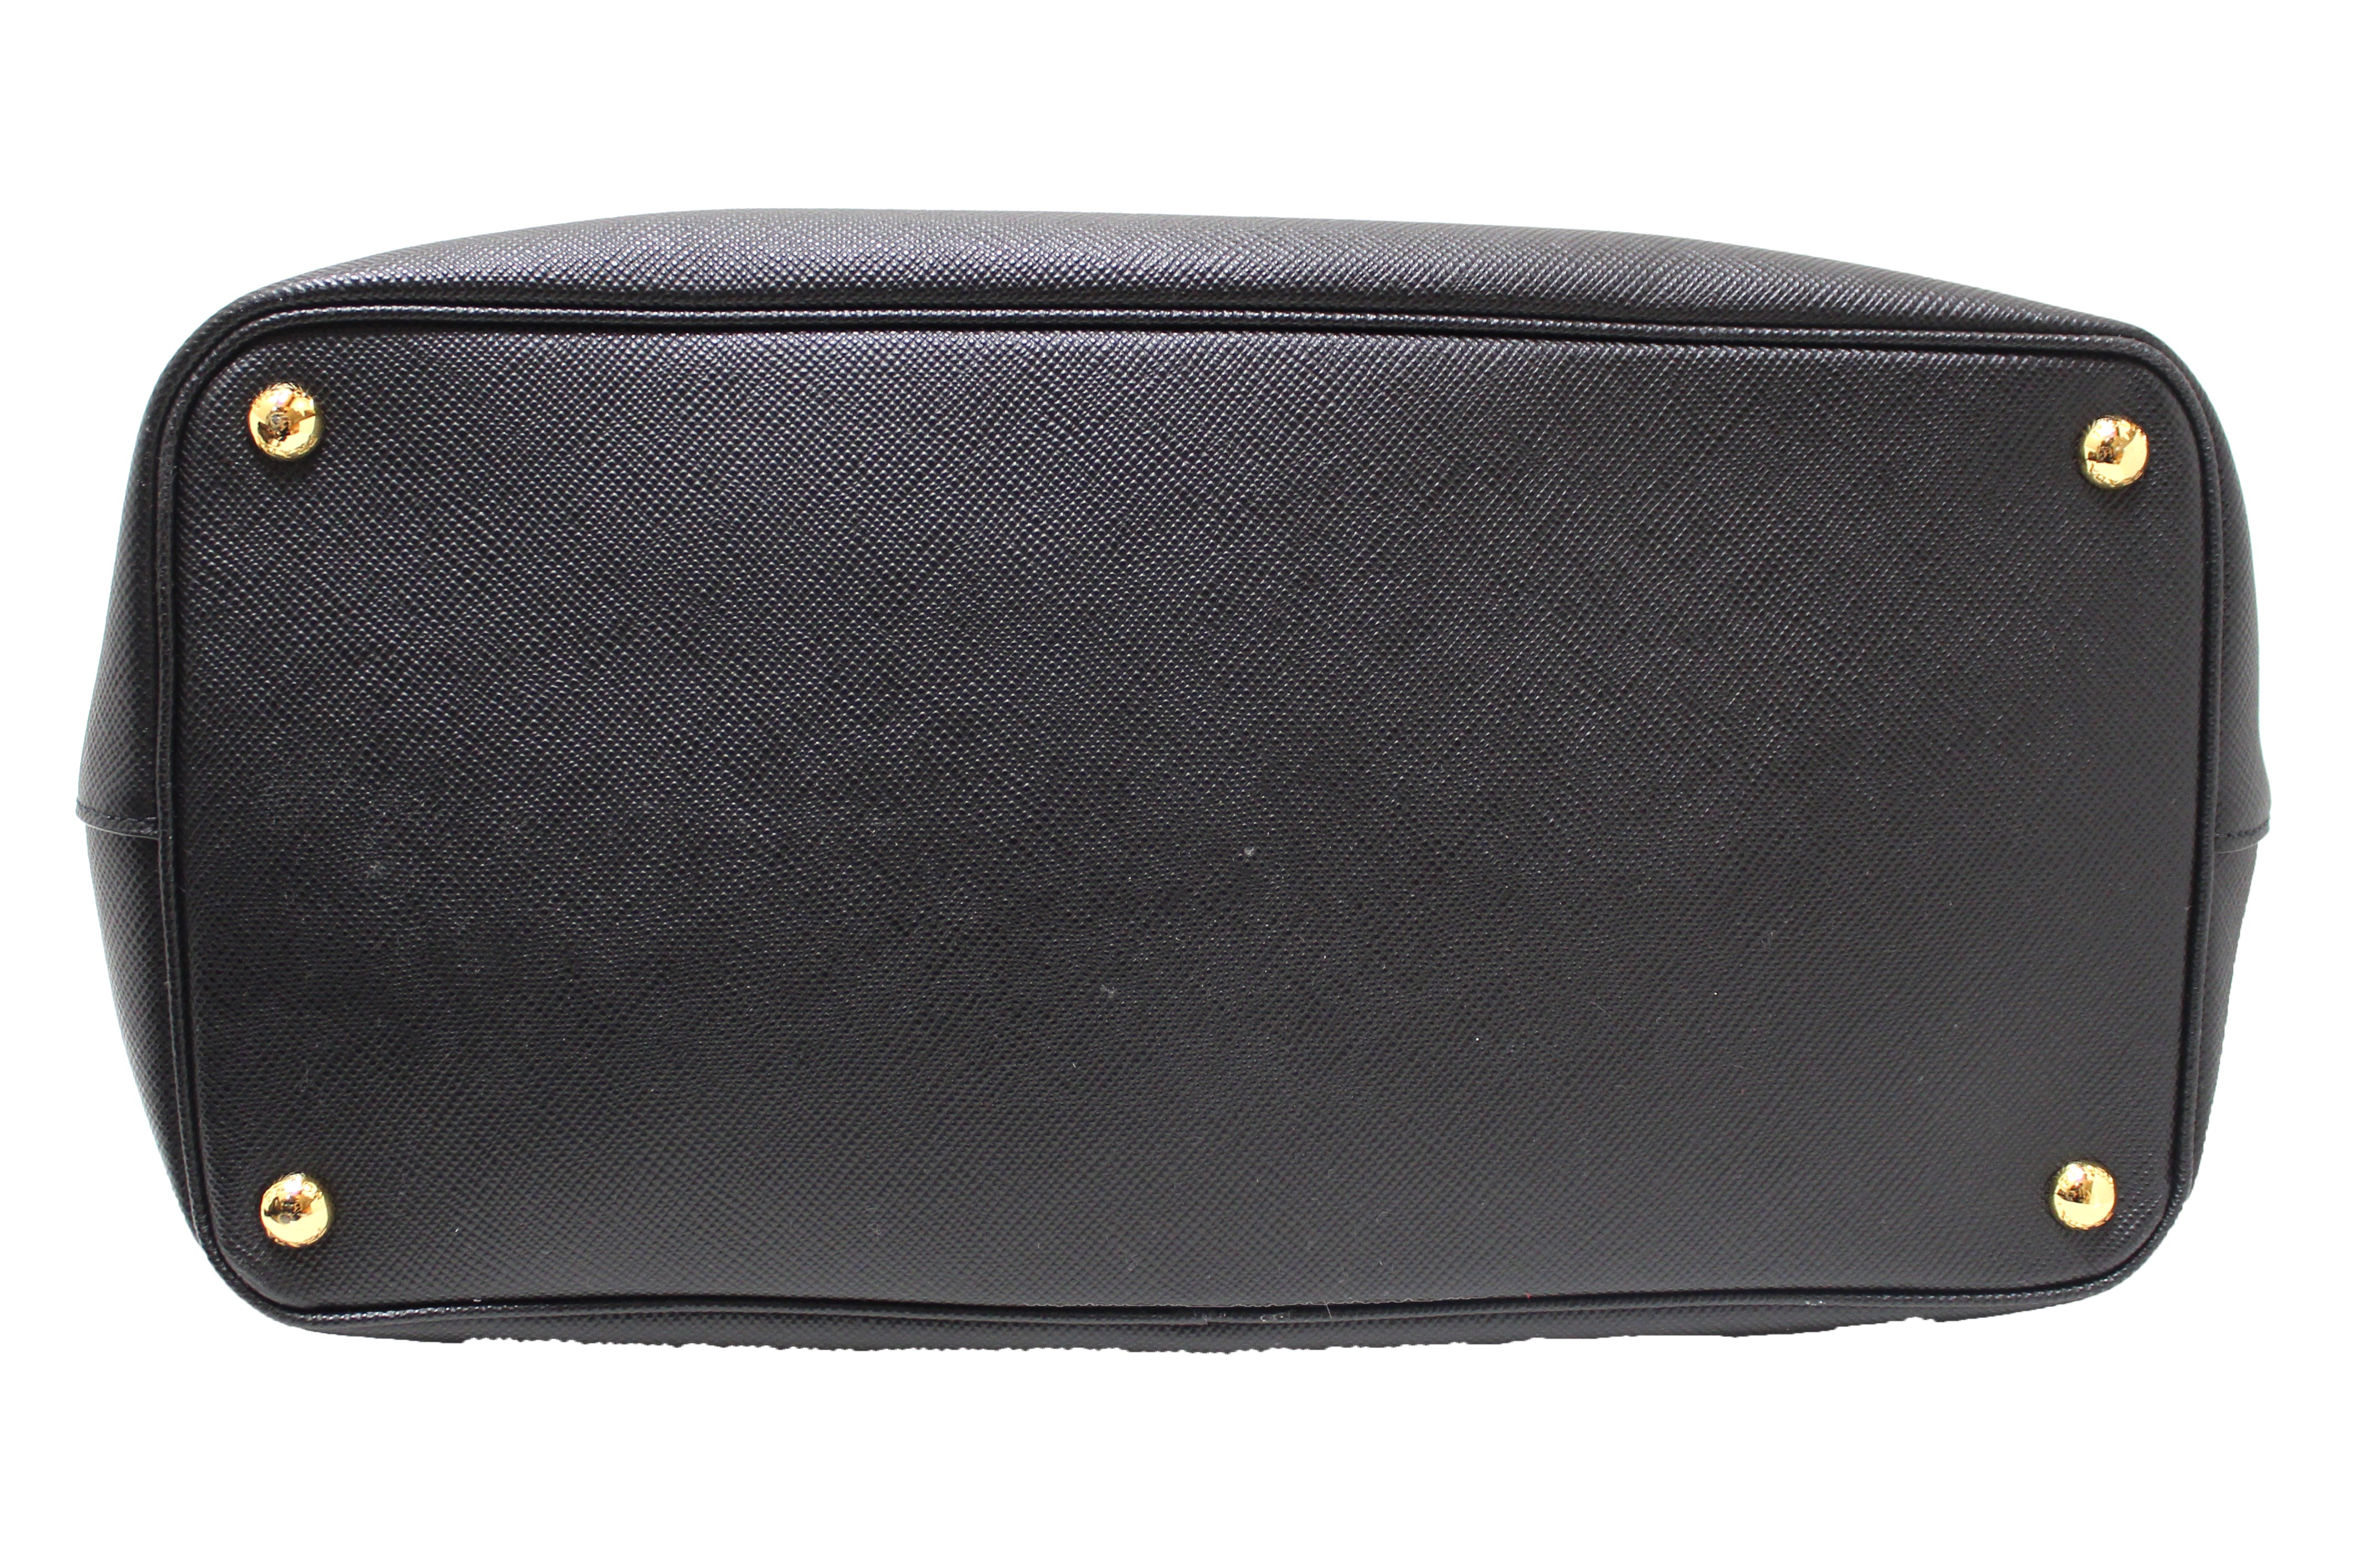 Authentic Prada Black Saffiano Leather Buckle Tote Bag